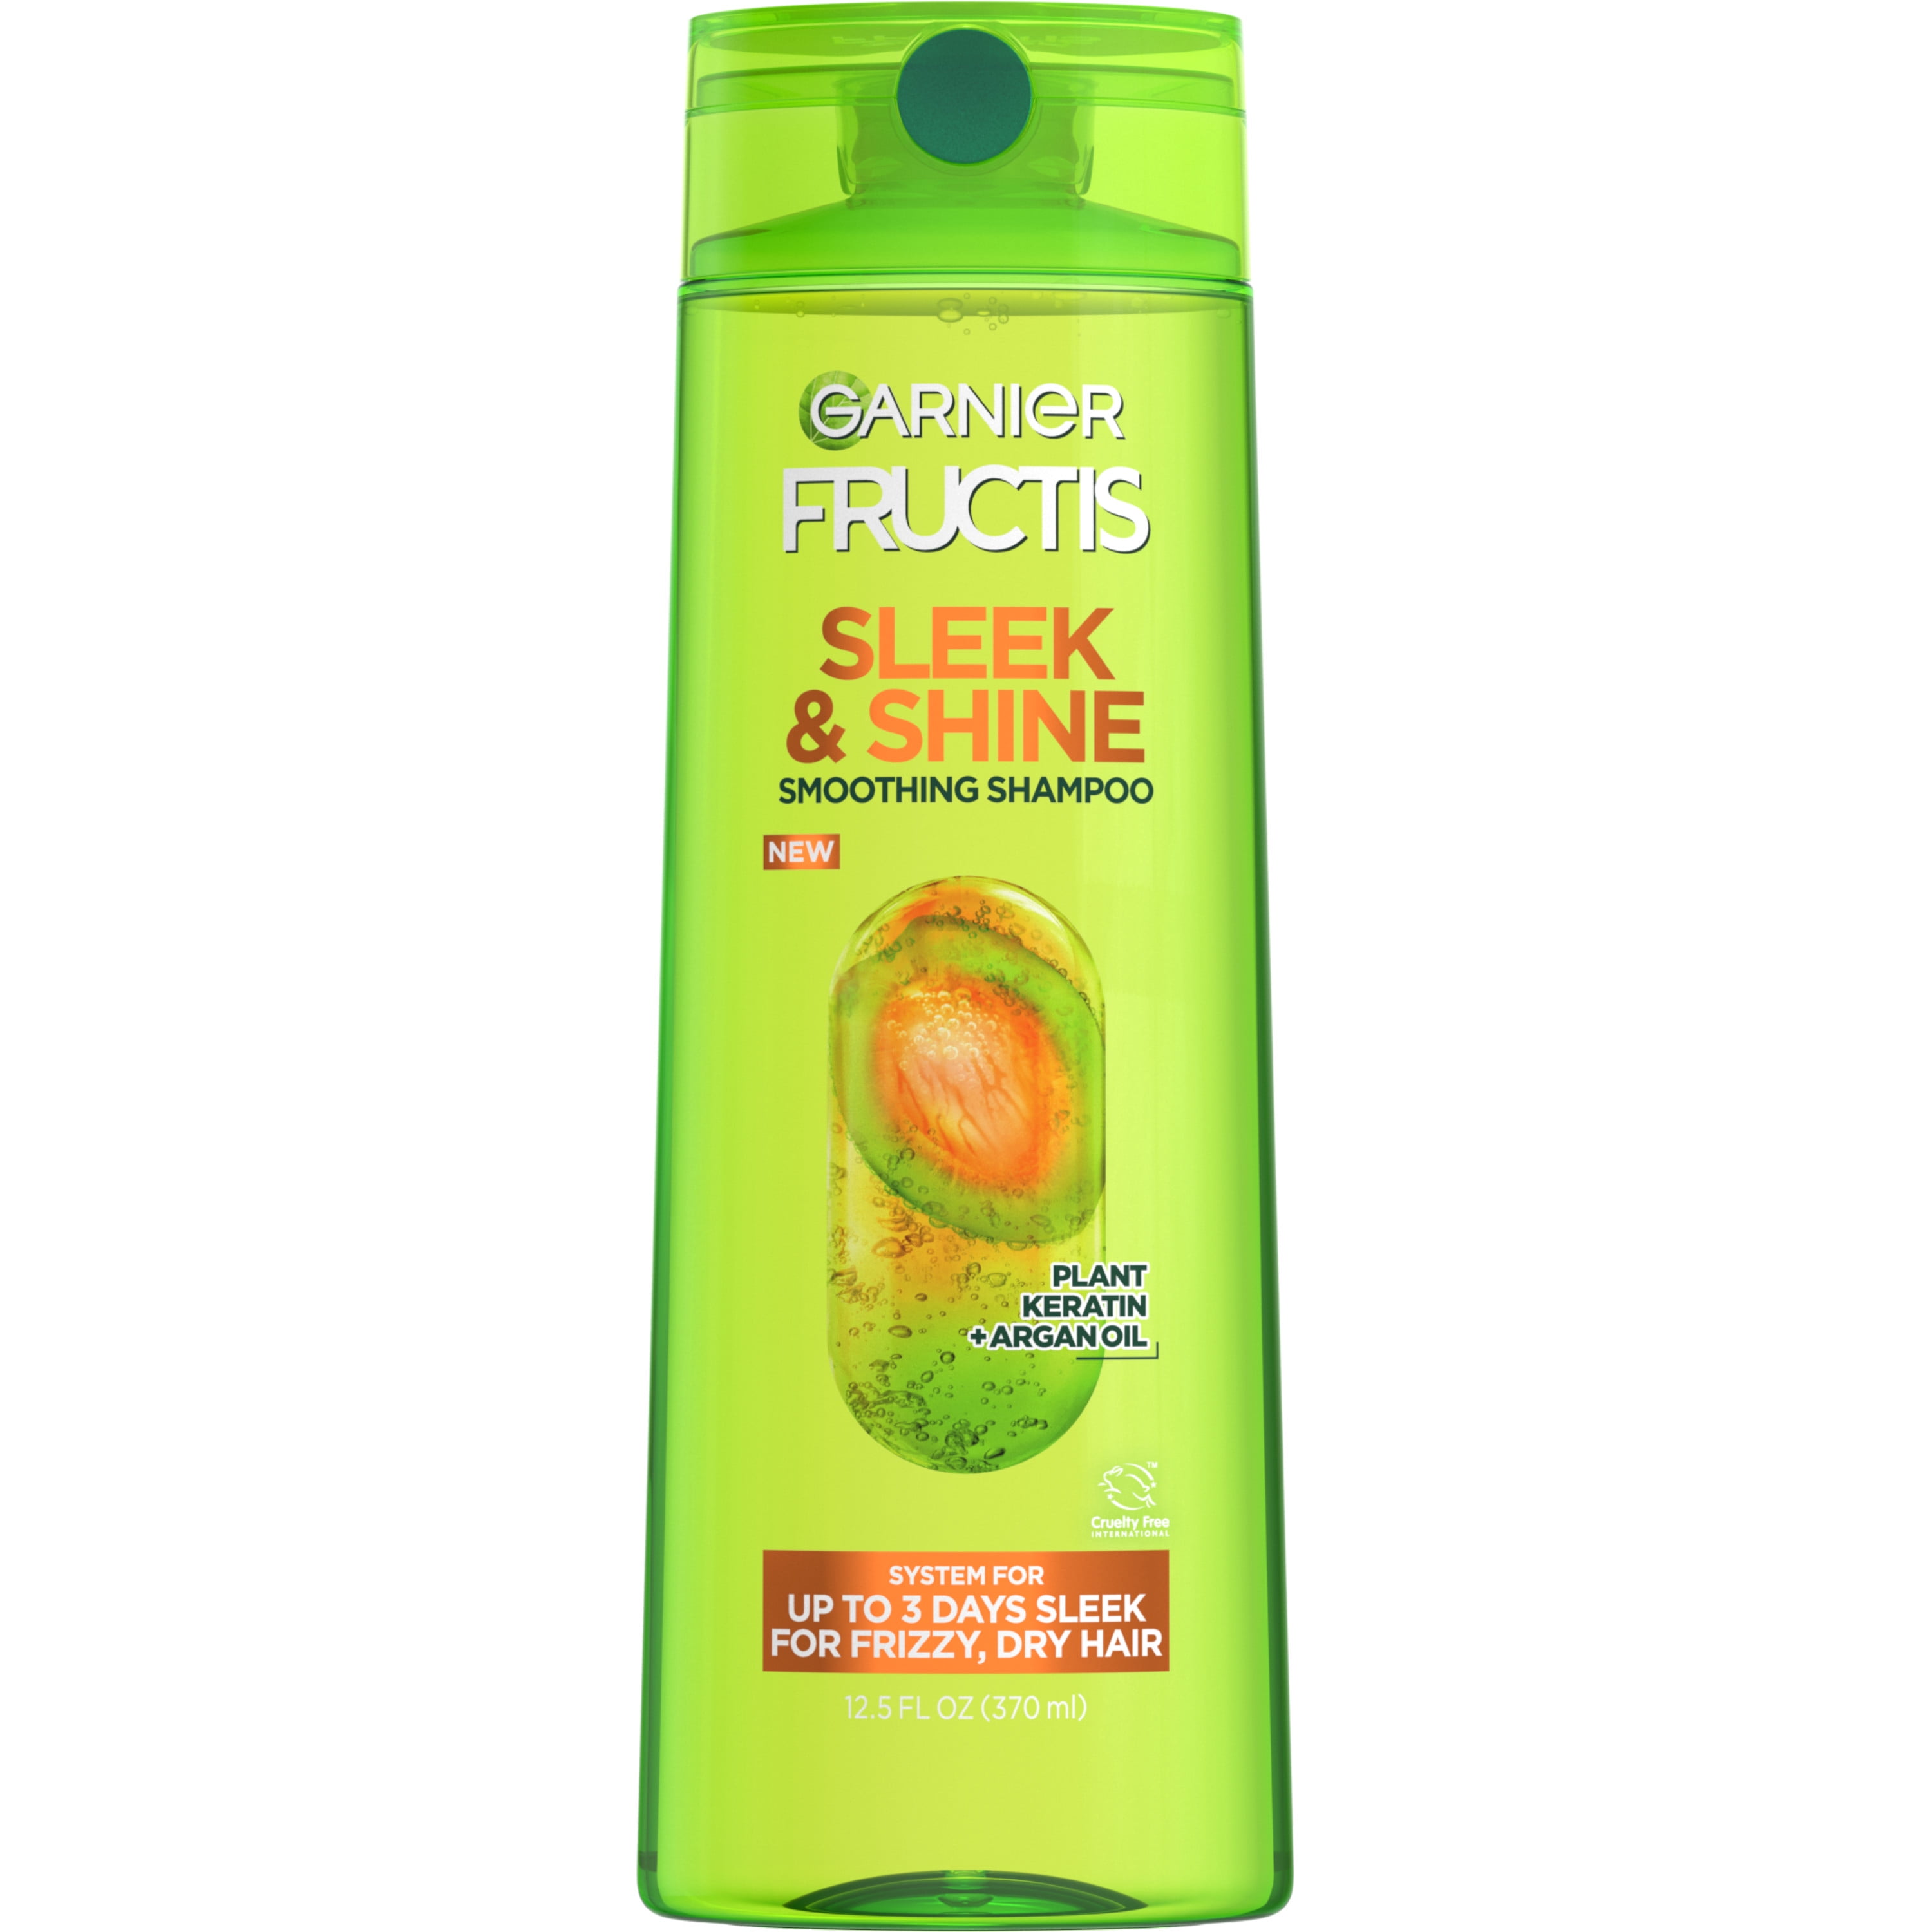 Garnier Fructis Sleek & Shine Smoothing Shampoo for Frizzy, Dry Hair, 12.5 fl oz